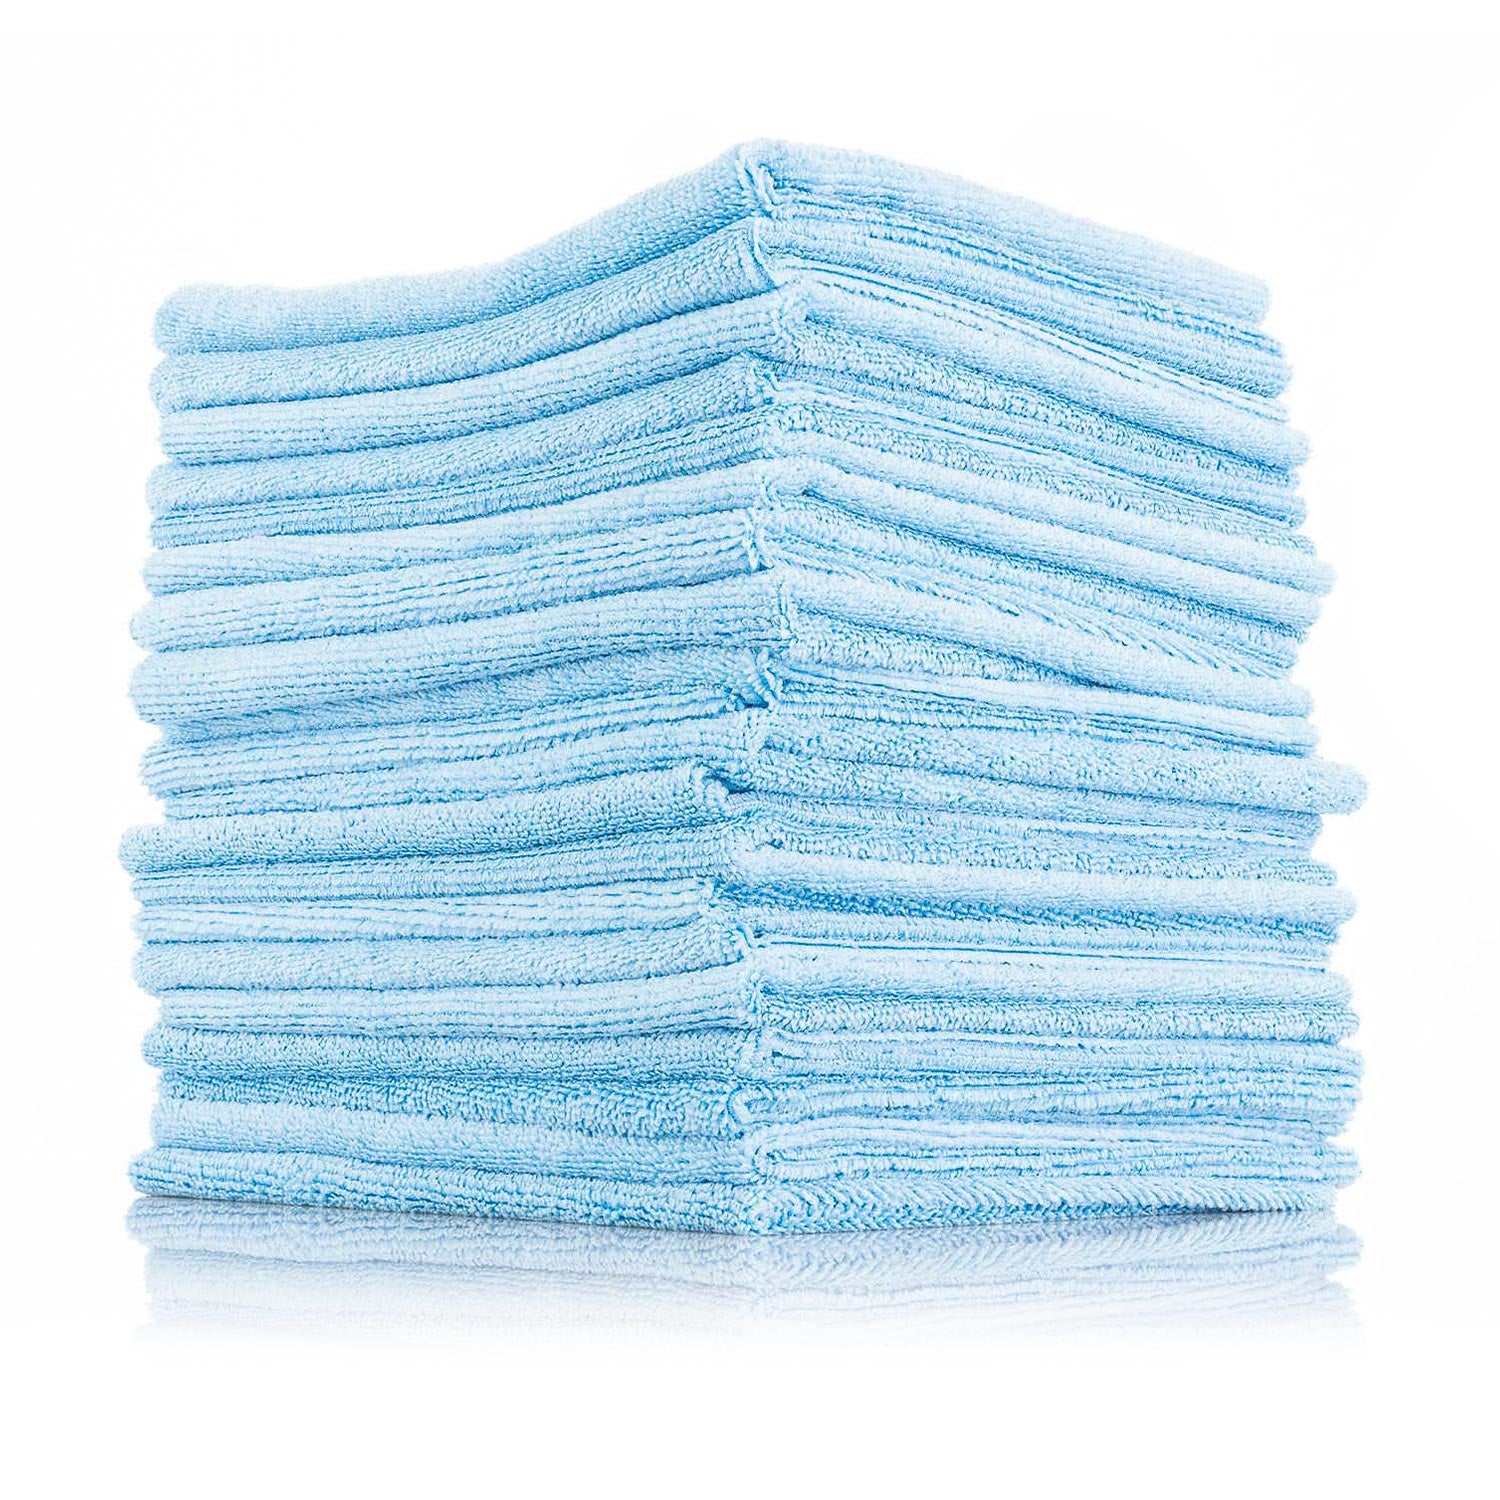 edgeless-microfiber-towels-300-gsm-light-blue-20-pack